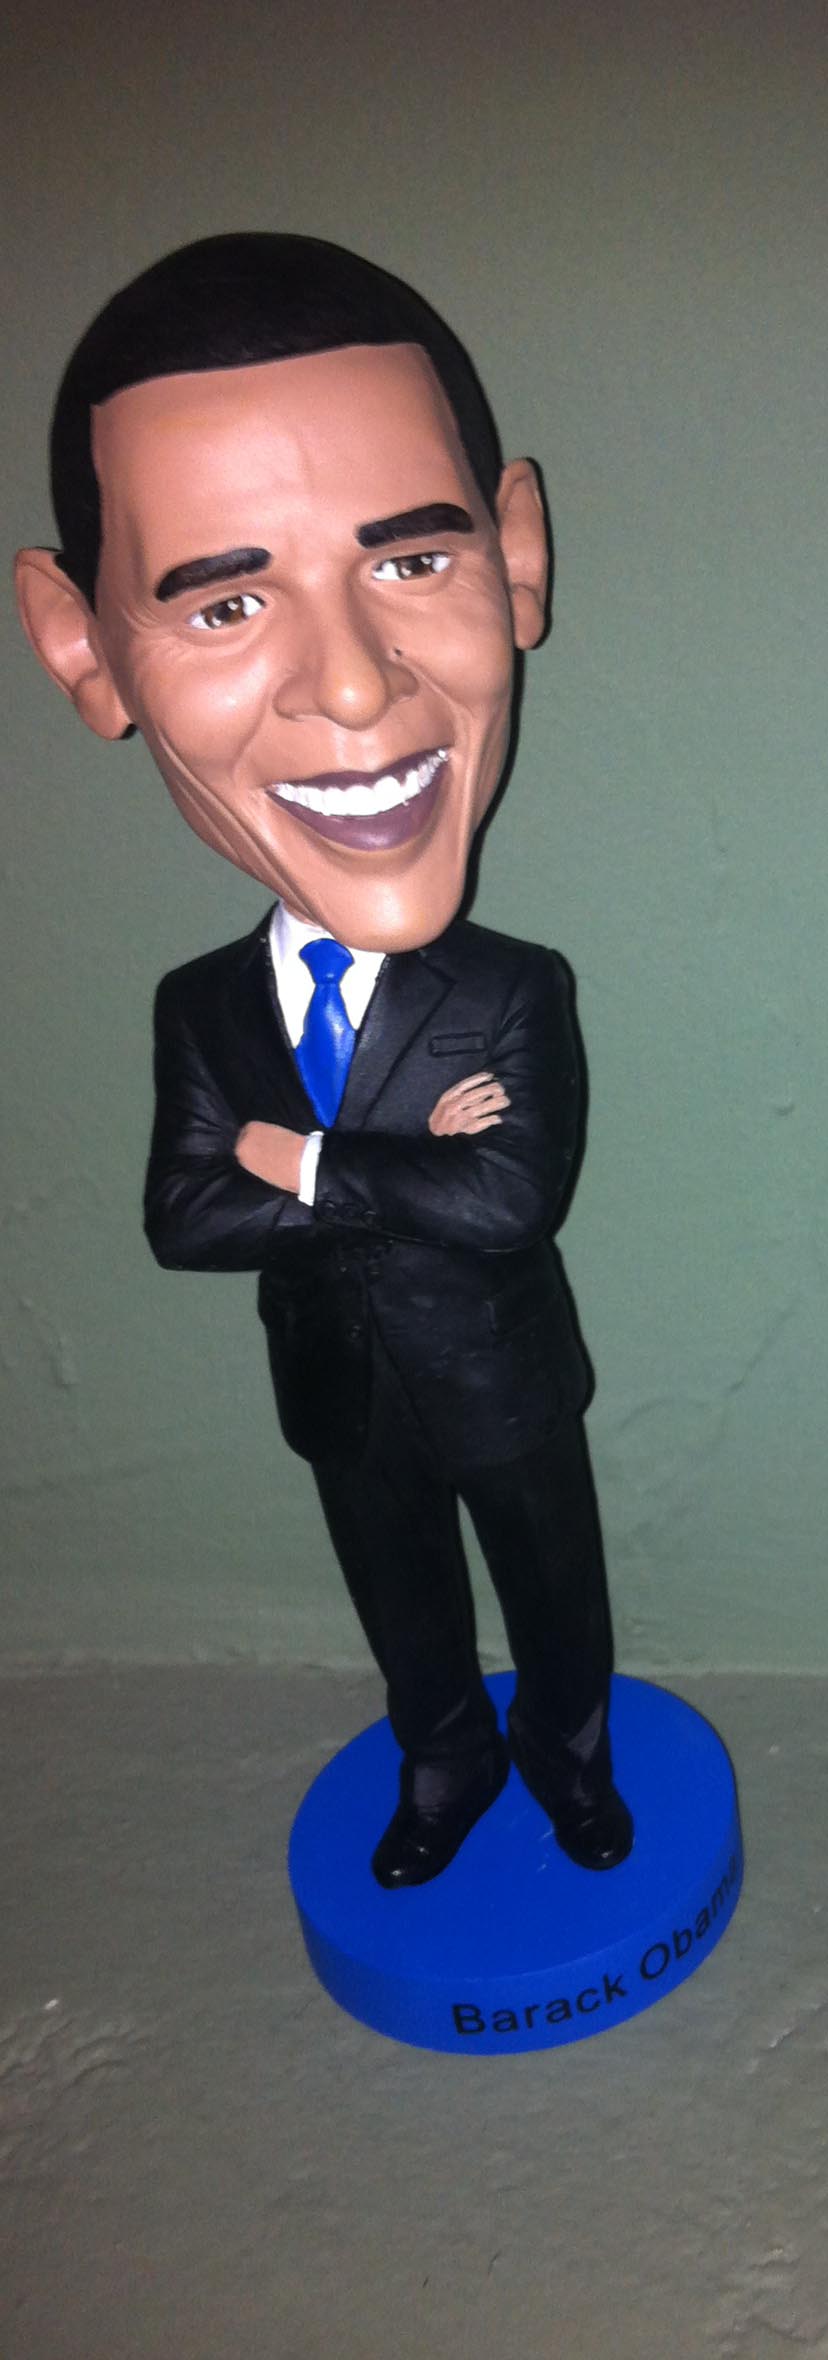 Obama Bobblehead